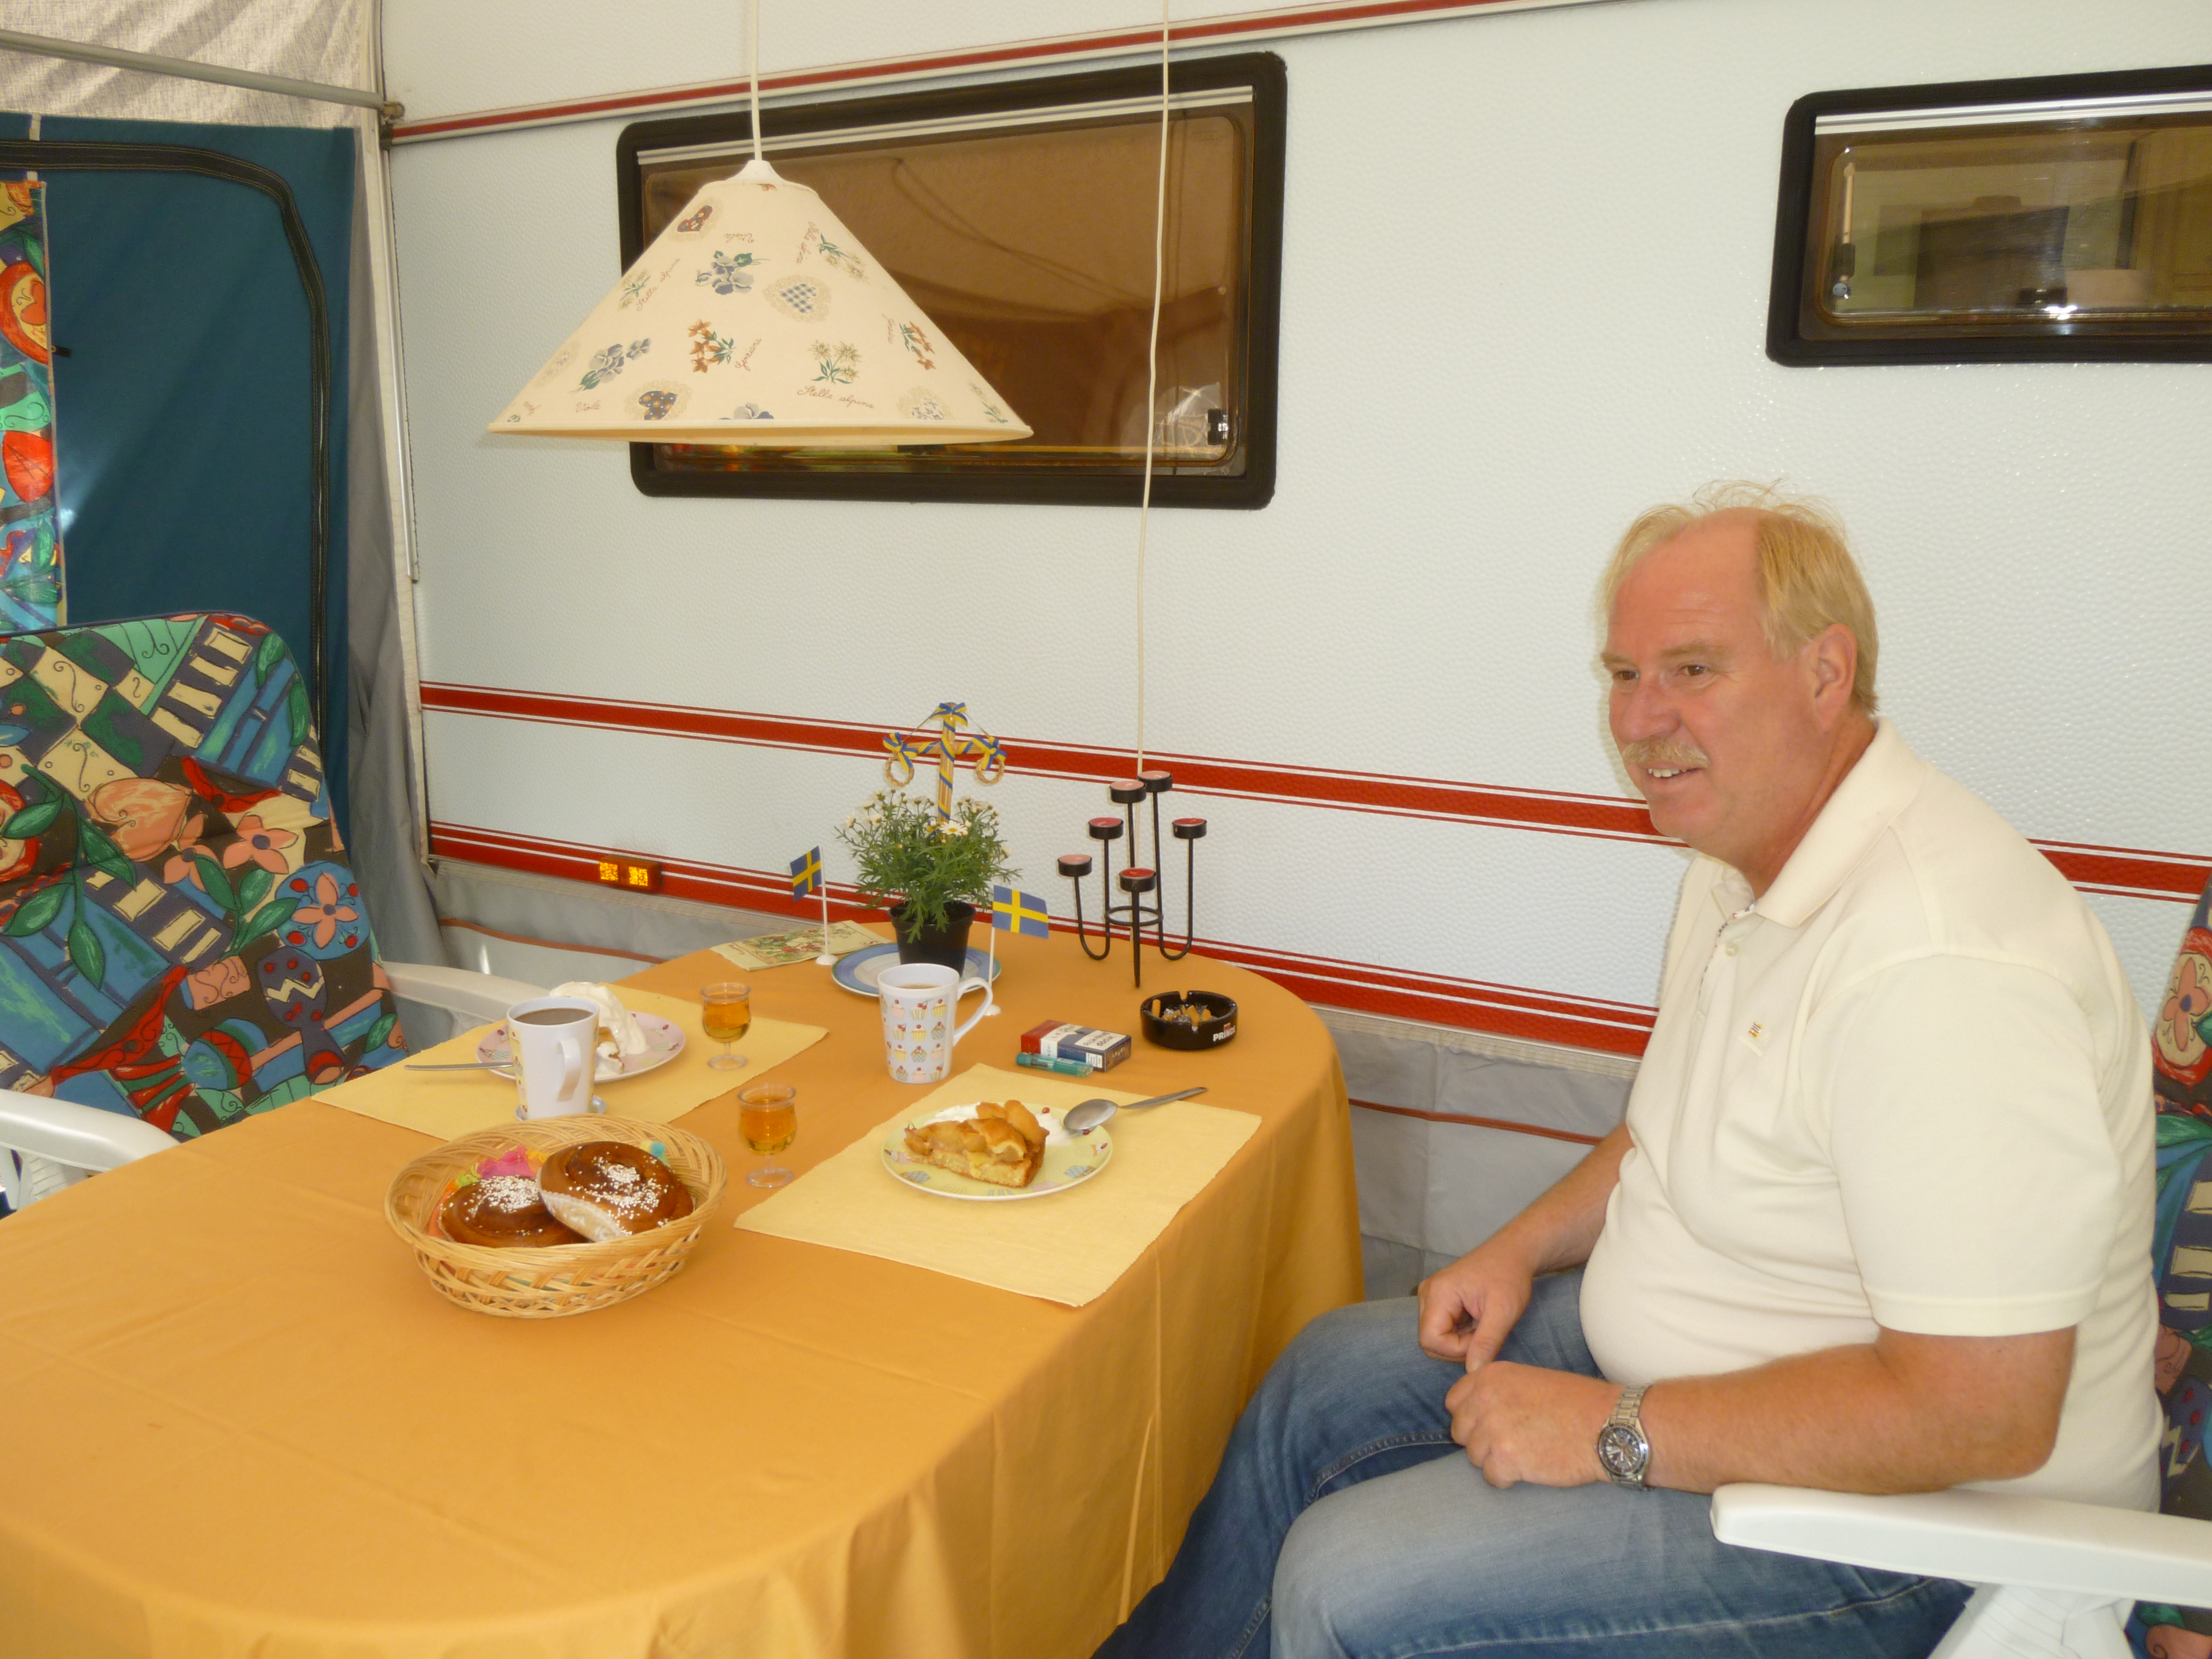 Vi var bjudna på kaffe med avec hos ett par som bodde i husvagn, Ullerud hette de.